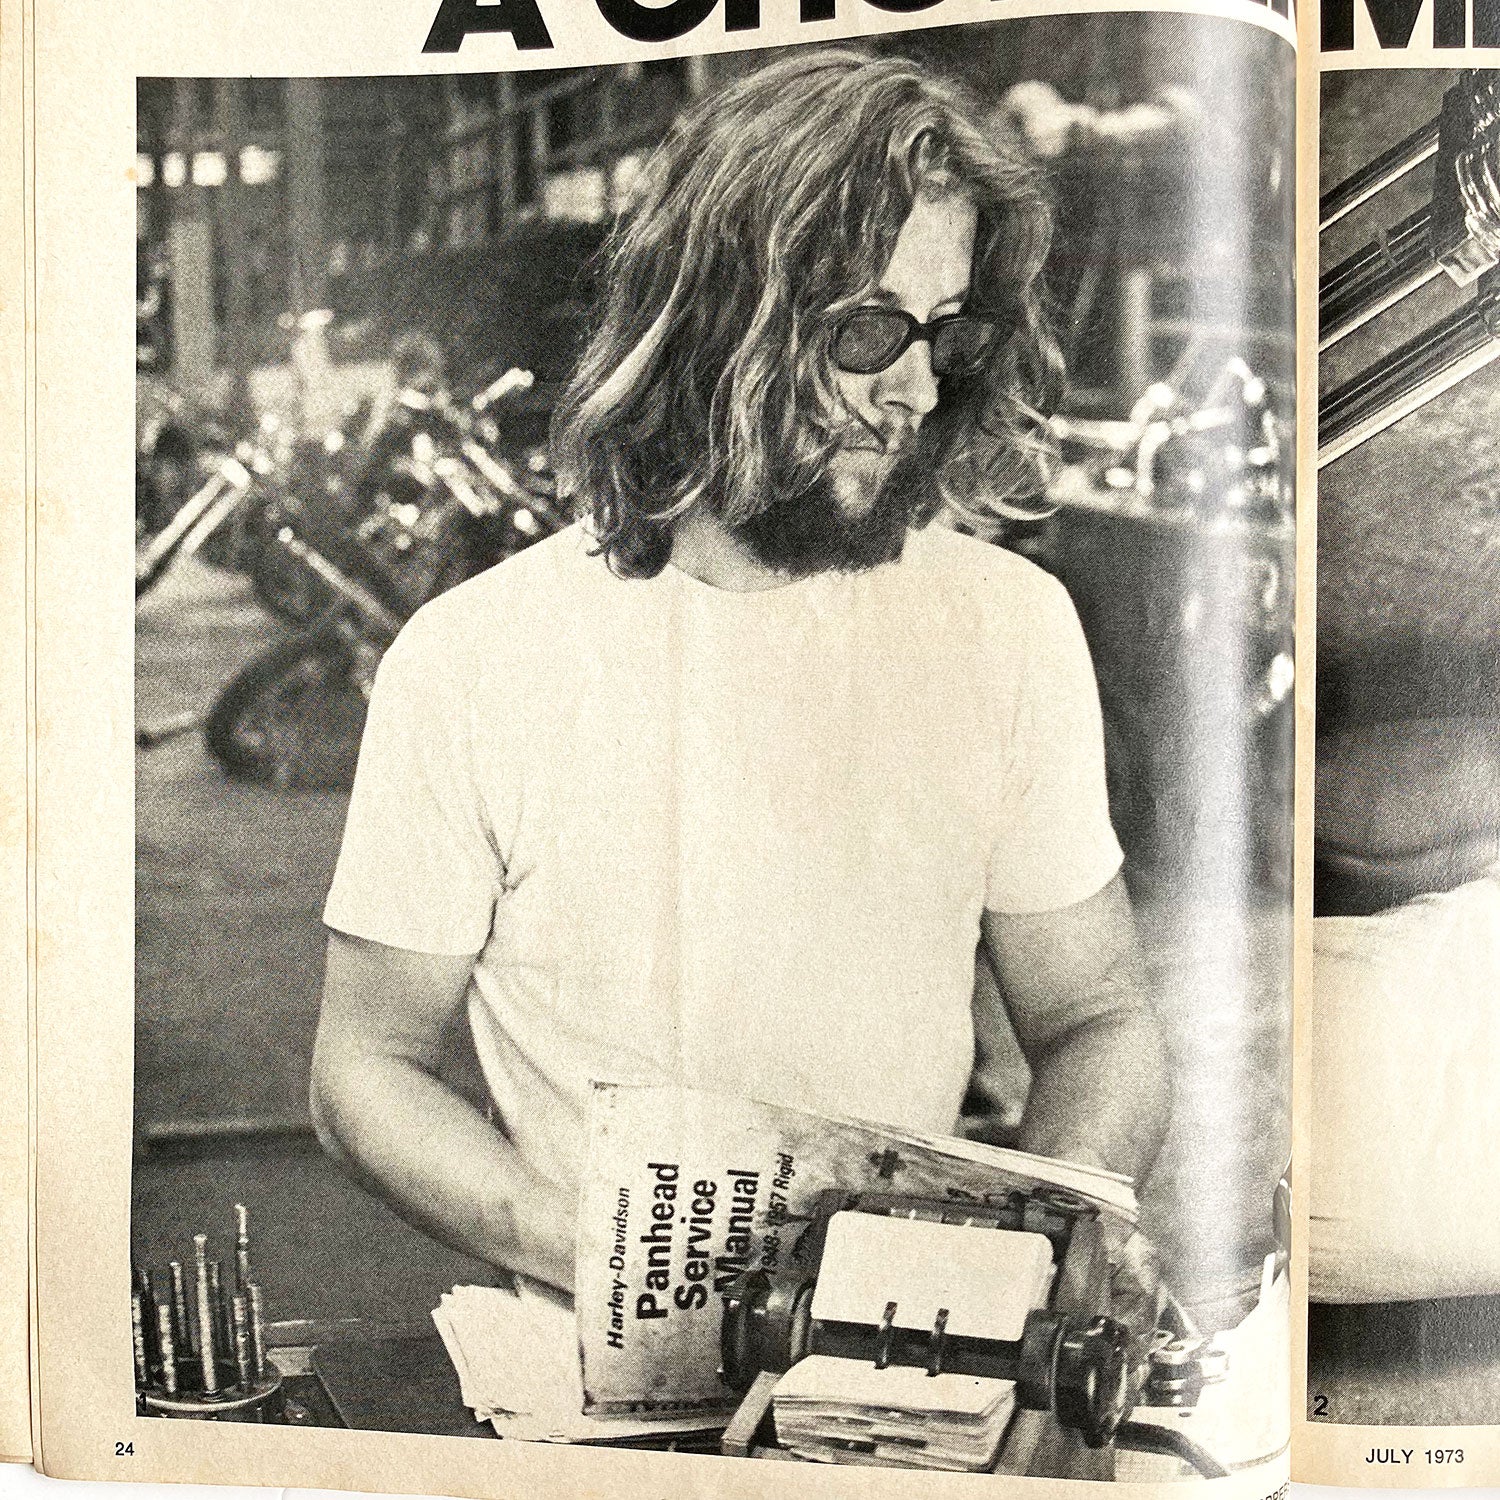 Choppers magazine, July 1973